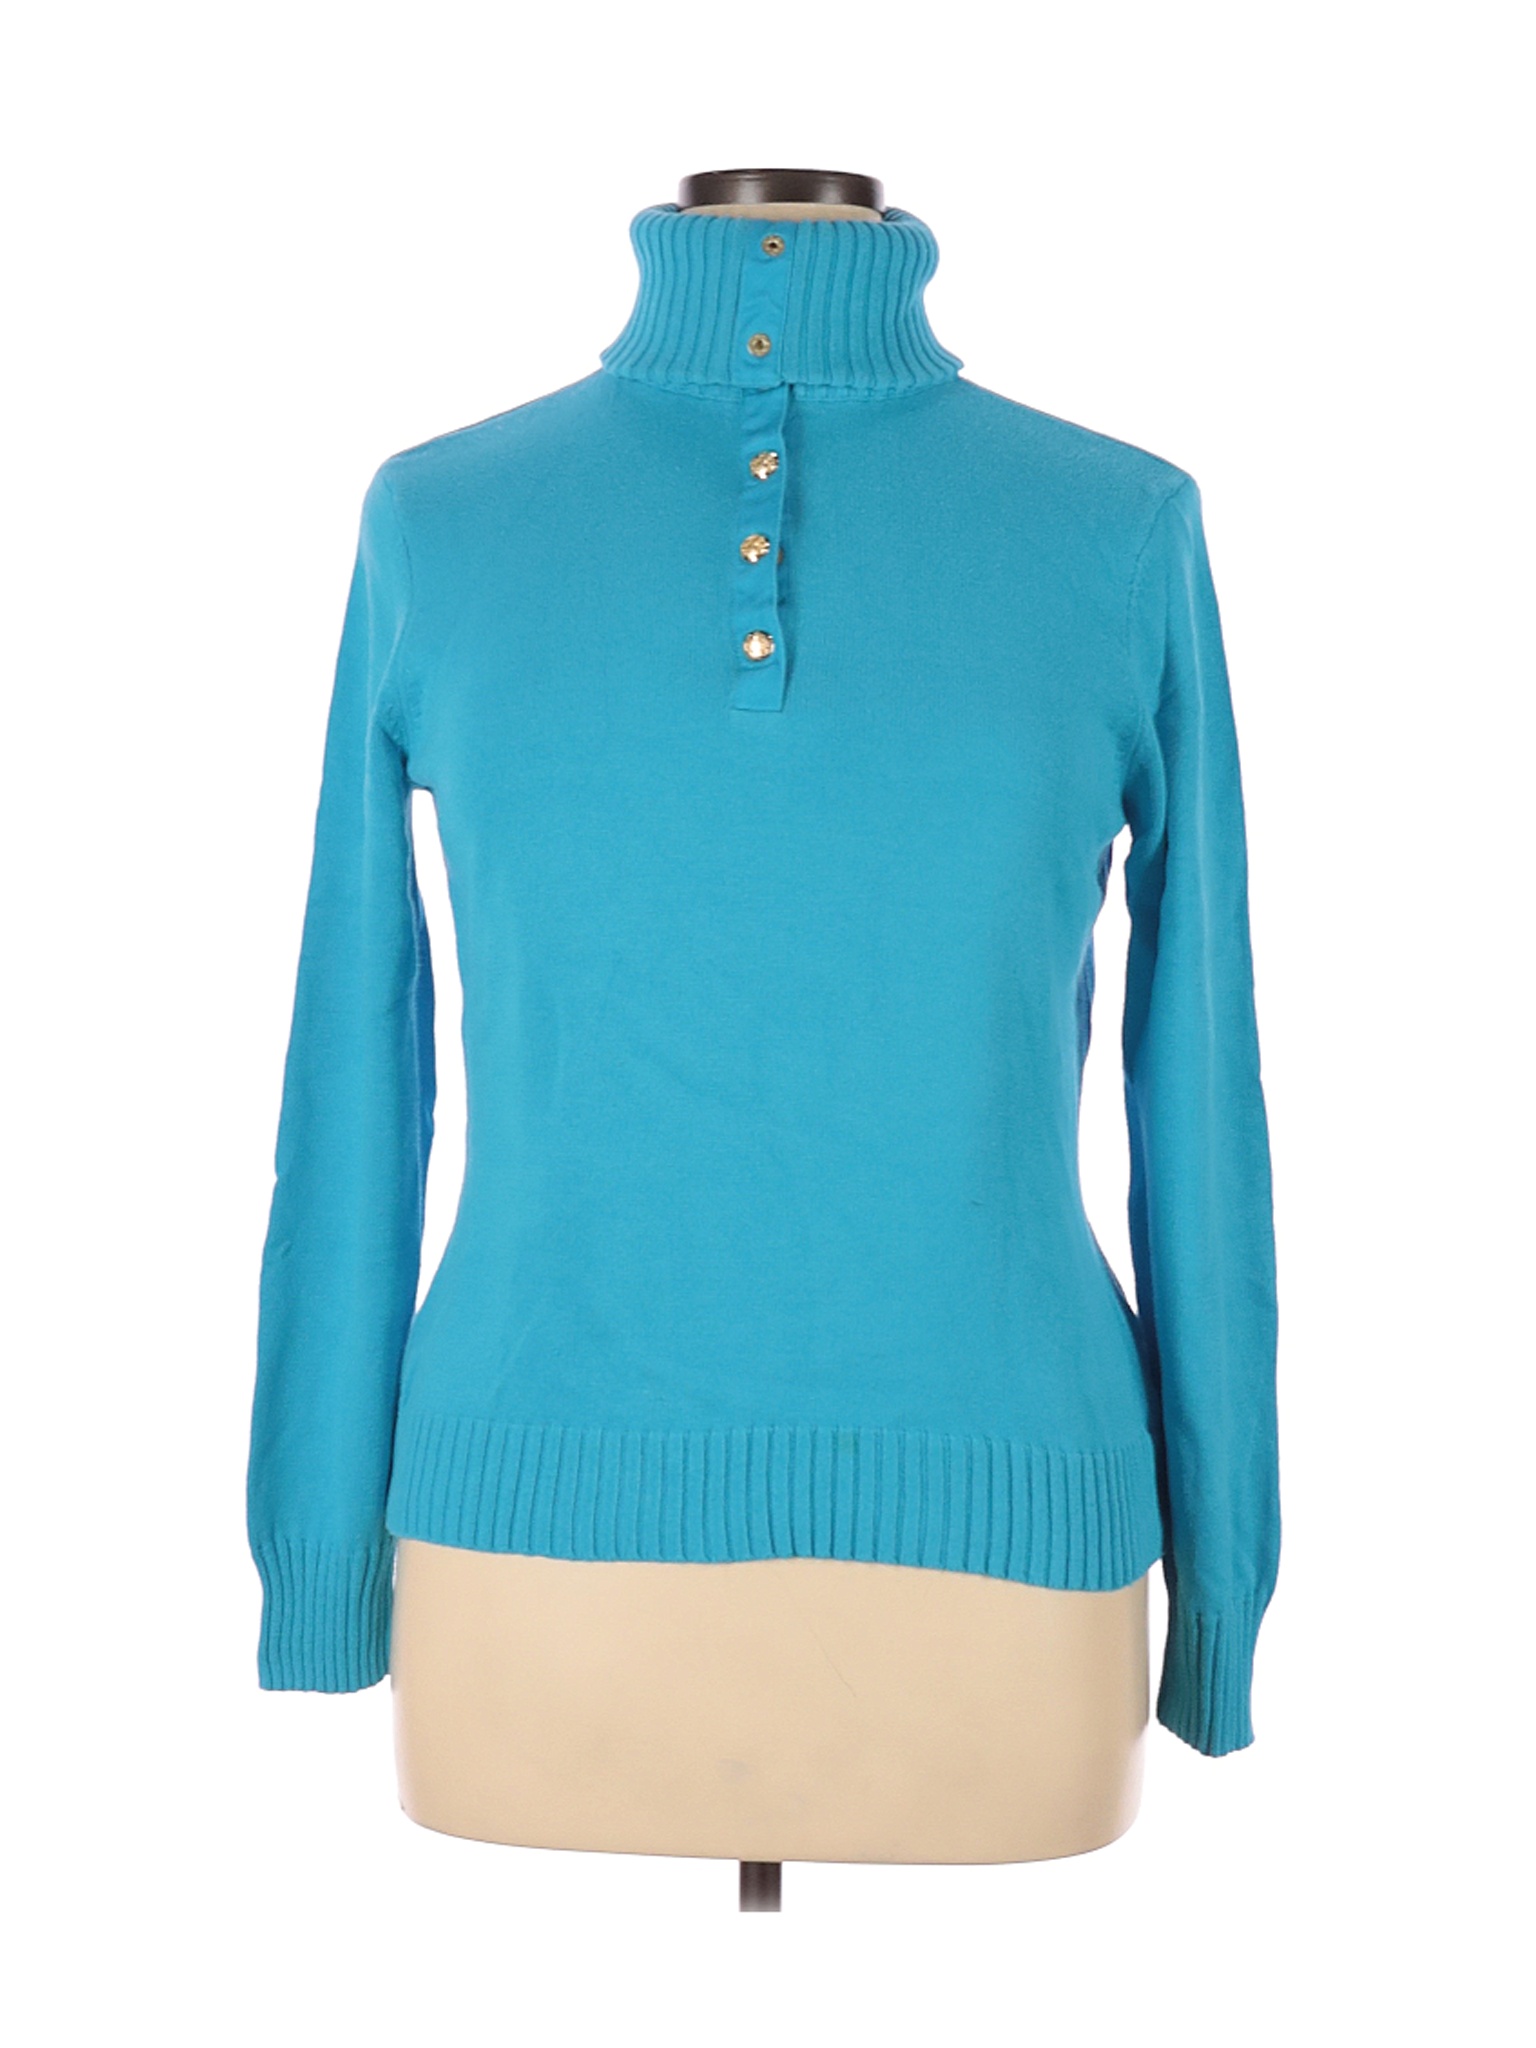 Lauren by Ralph Lauren Women Blue Turtleneck Sweater XL | eBay